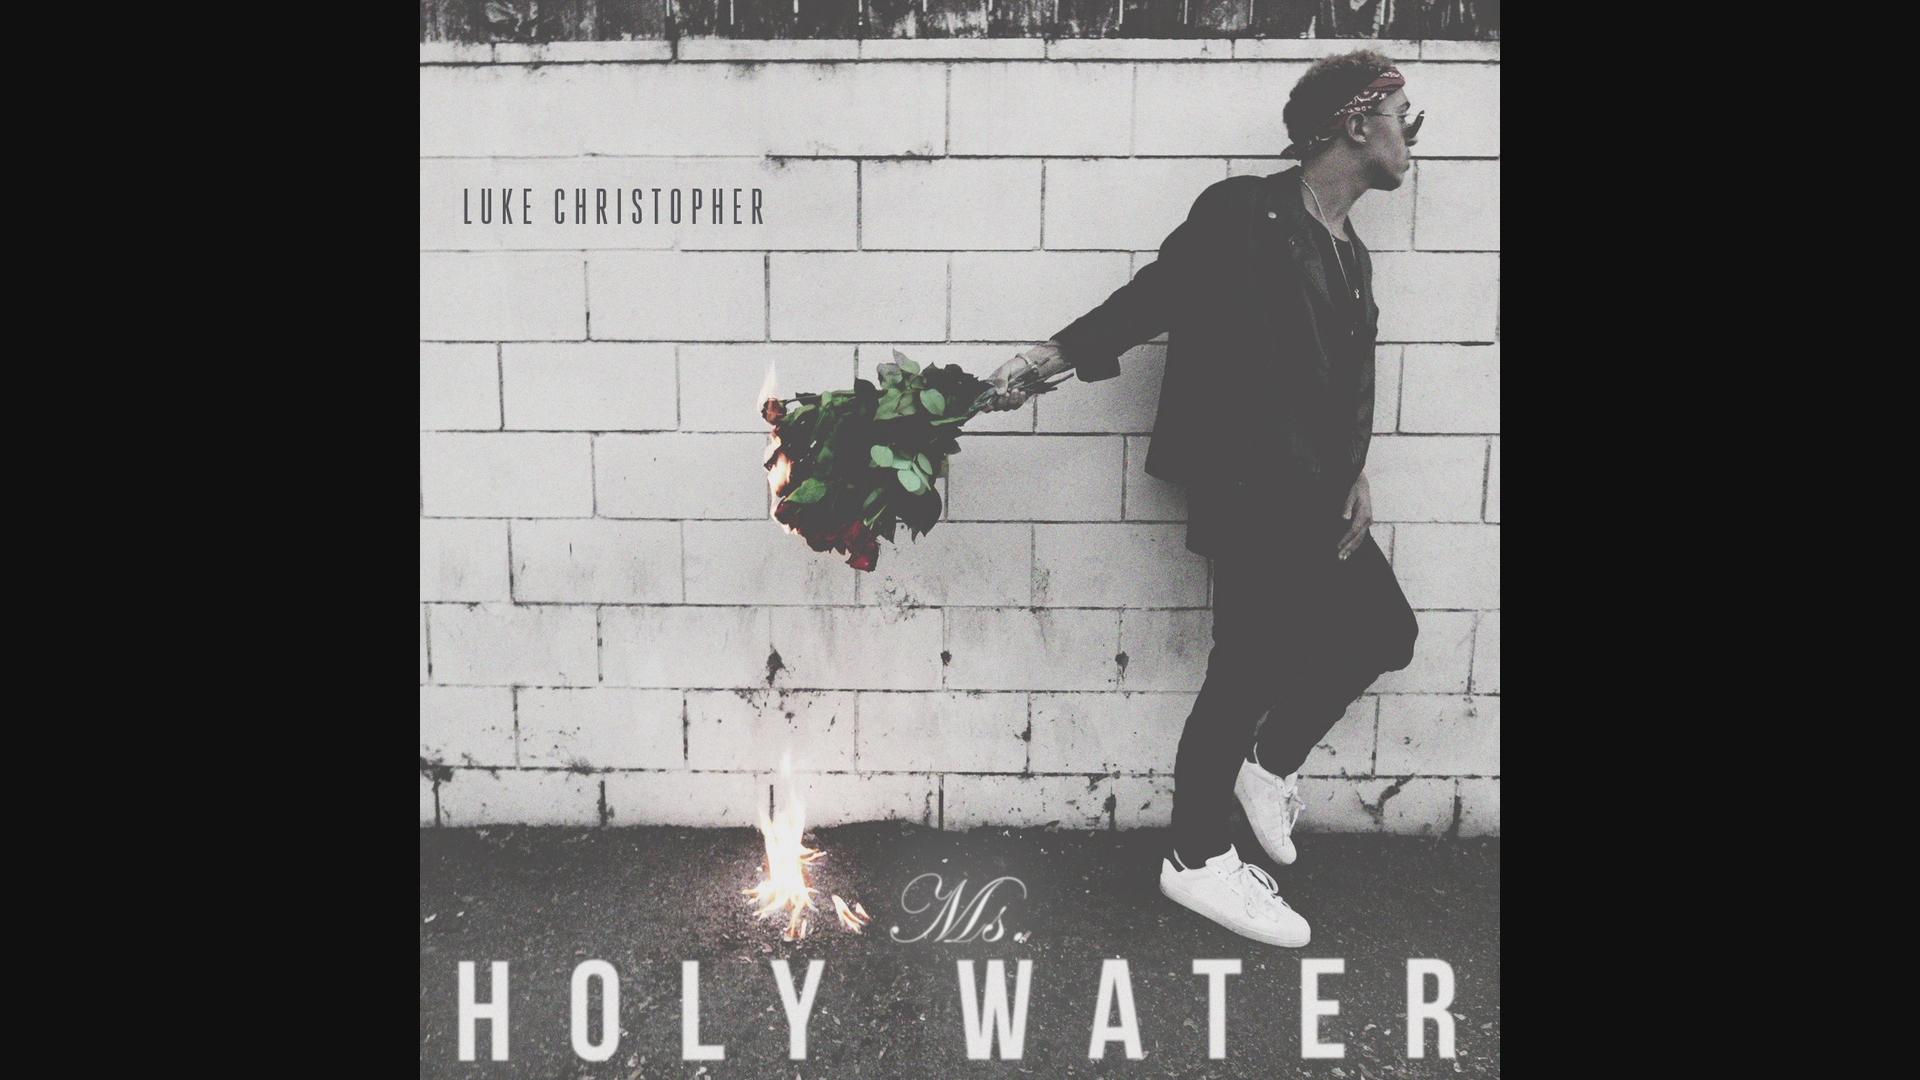 Luke Christopher Ms Holy Water